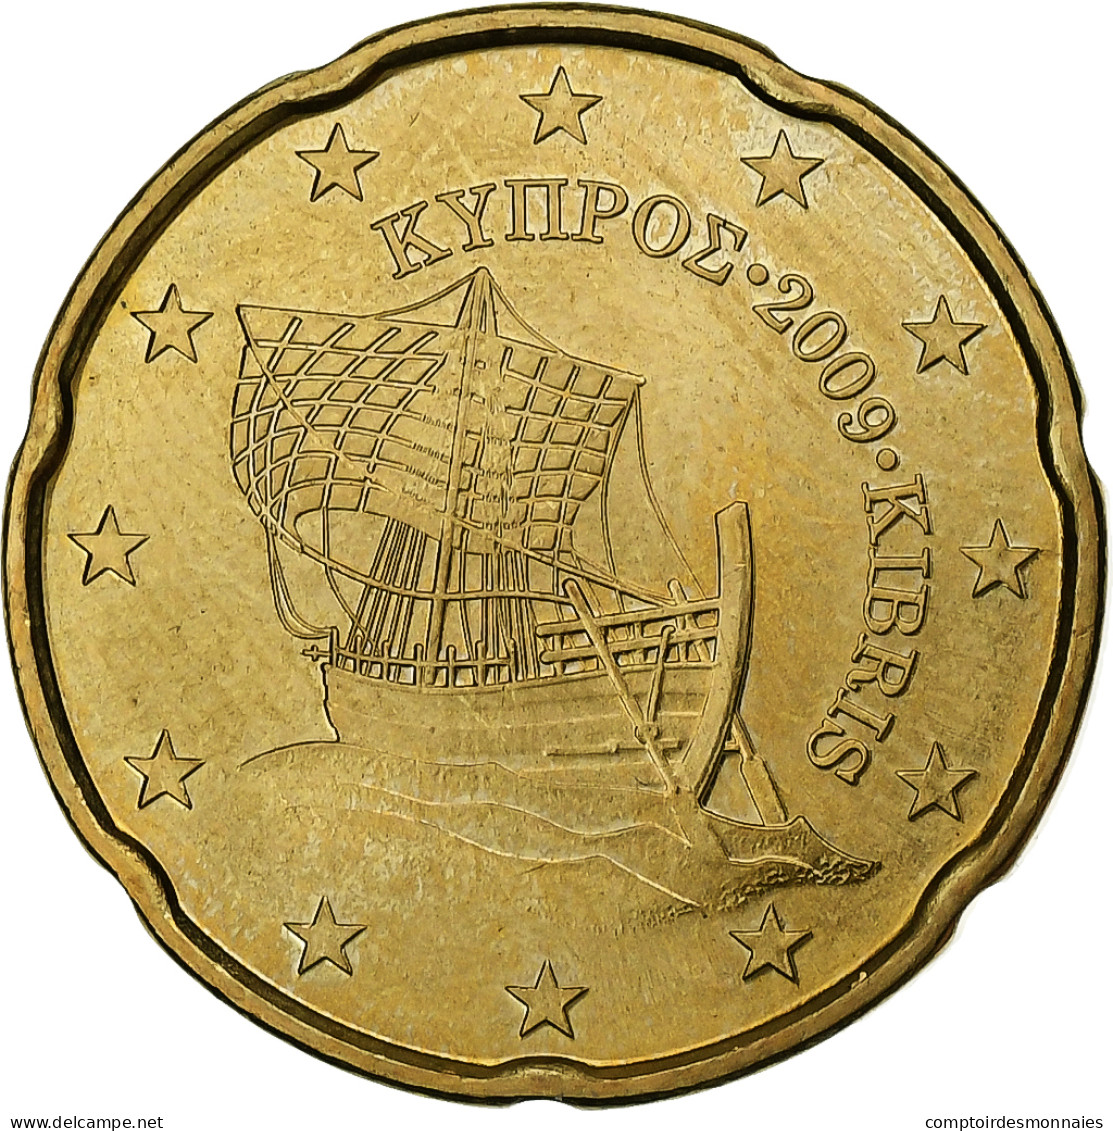 Chypre, 20 Euro Cent, 2009, SUP, Laiton, KM:82 - Chypre